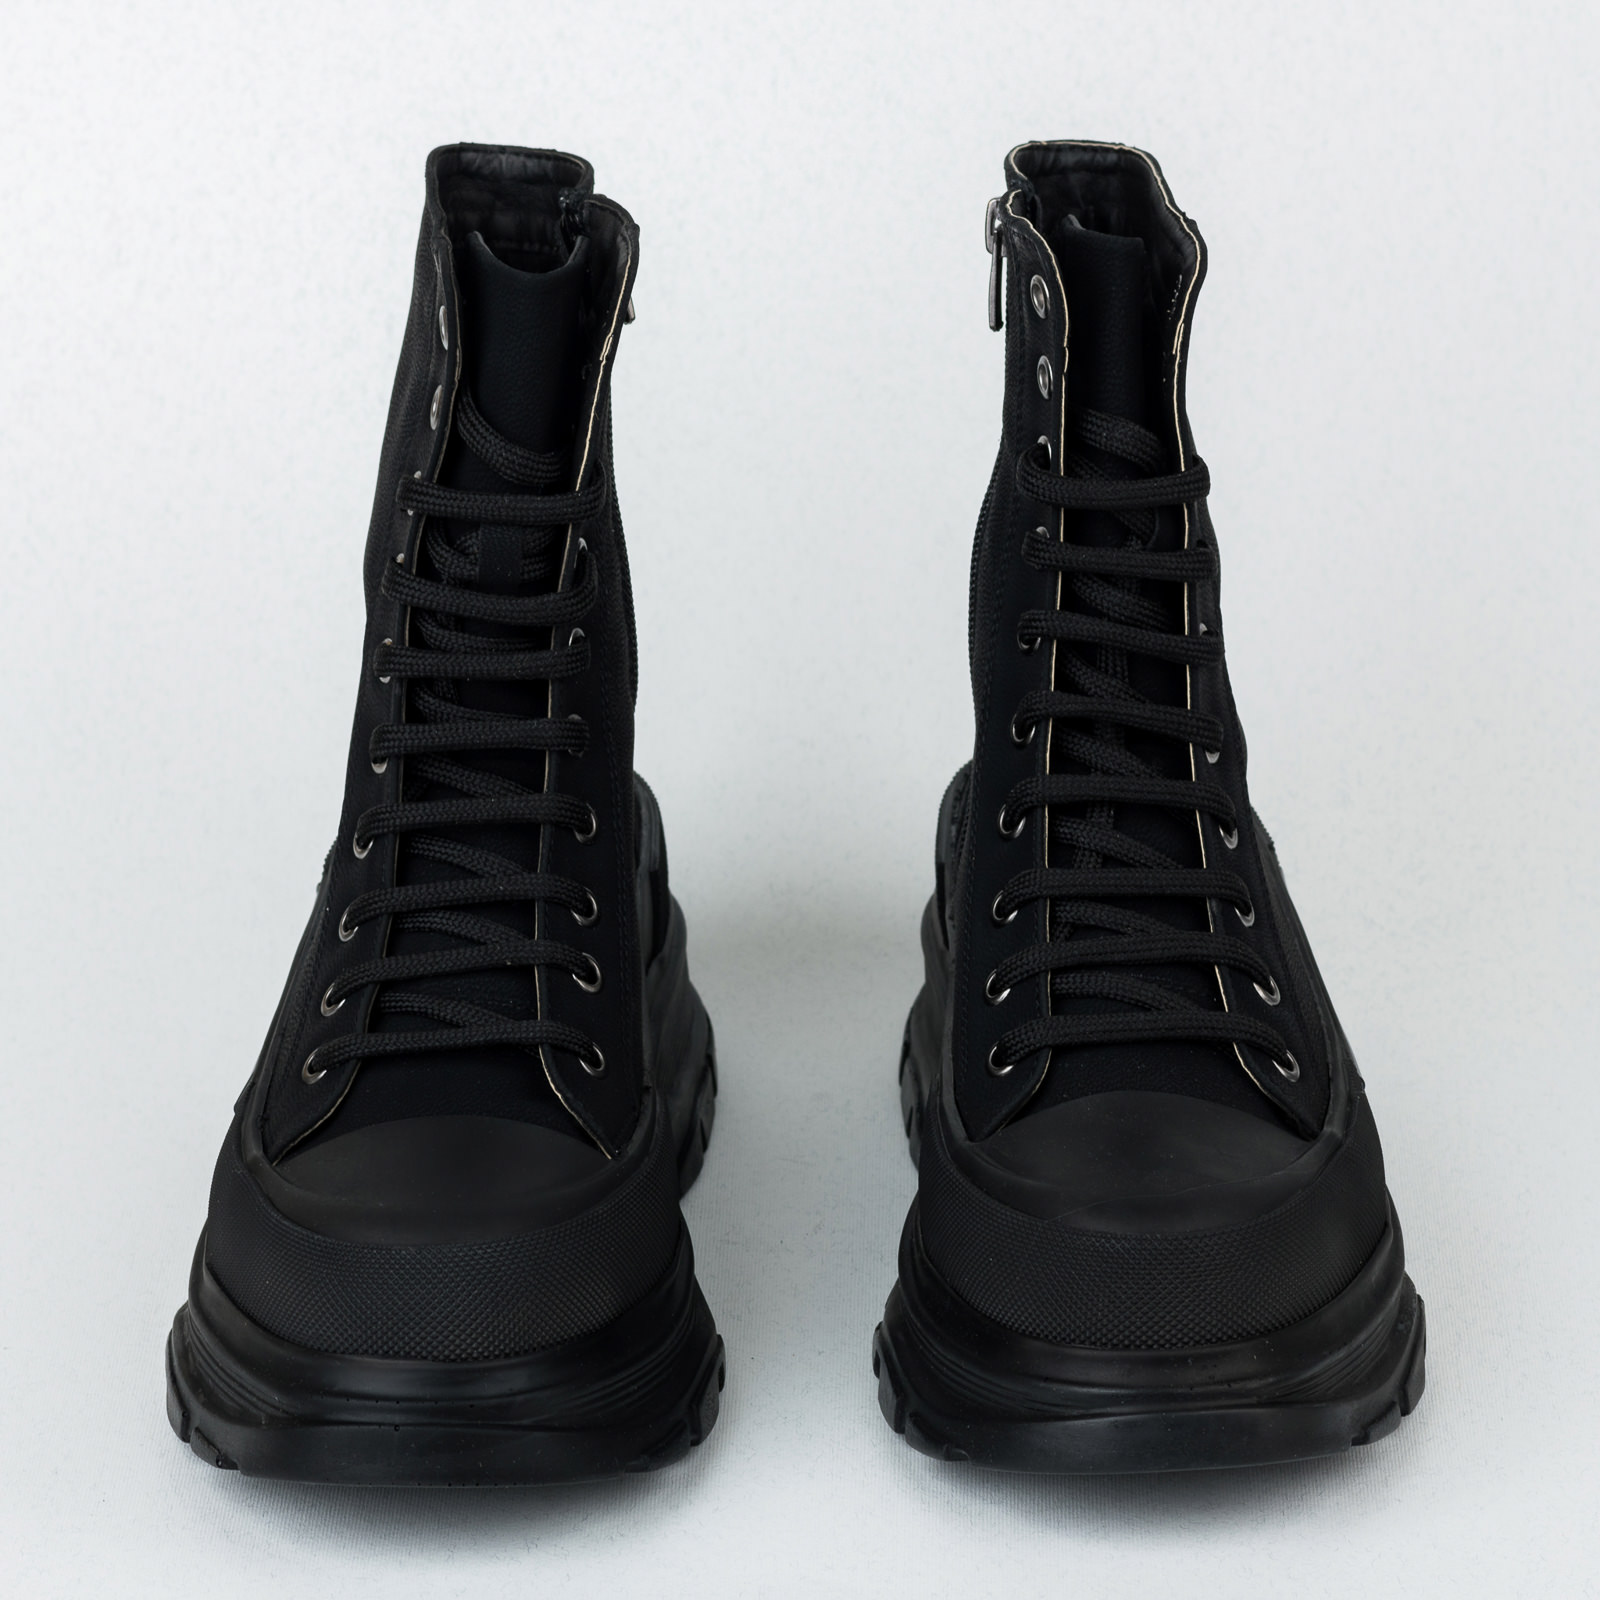 Women ankle boots B540 - BLACK